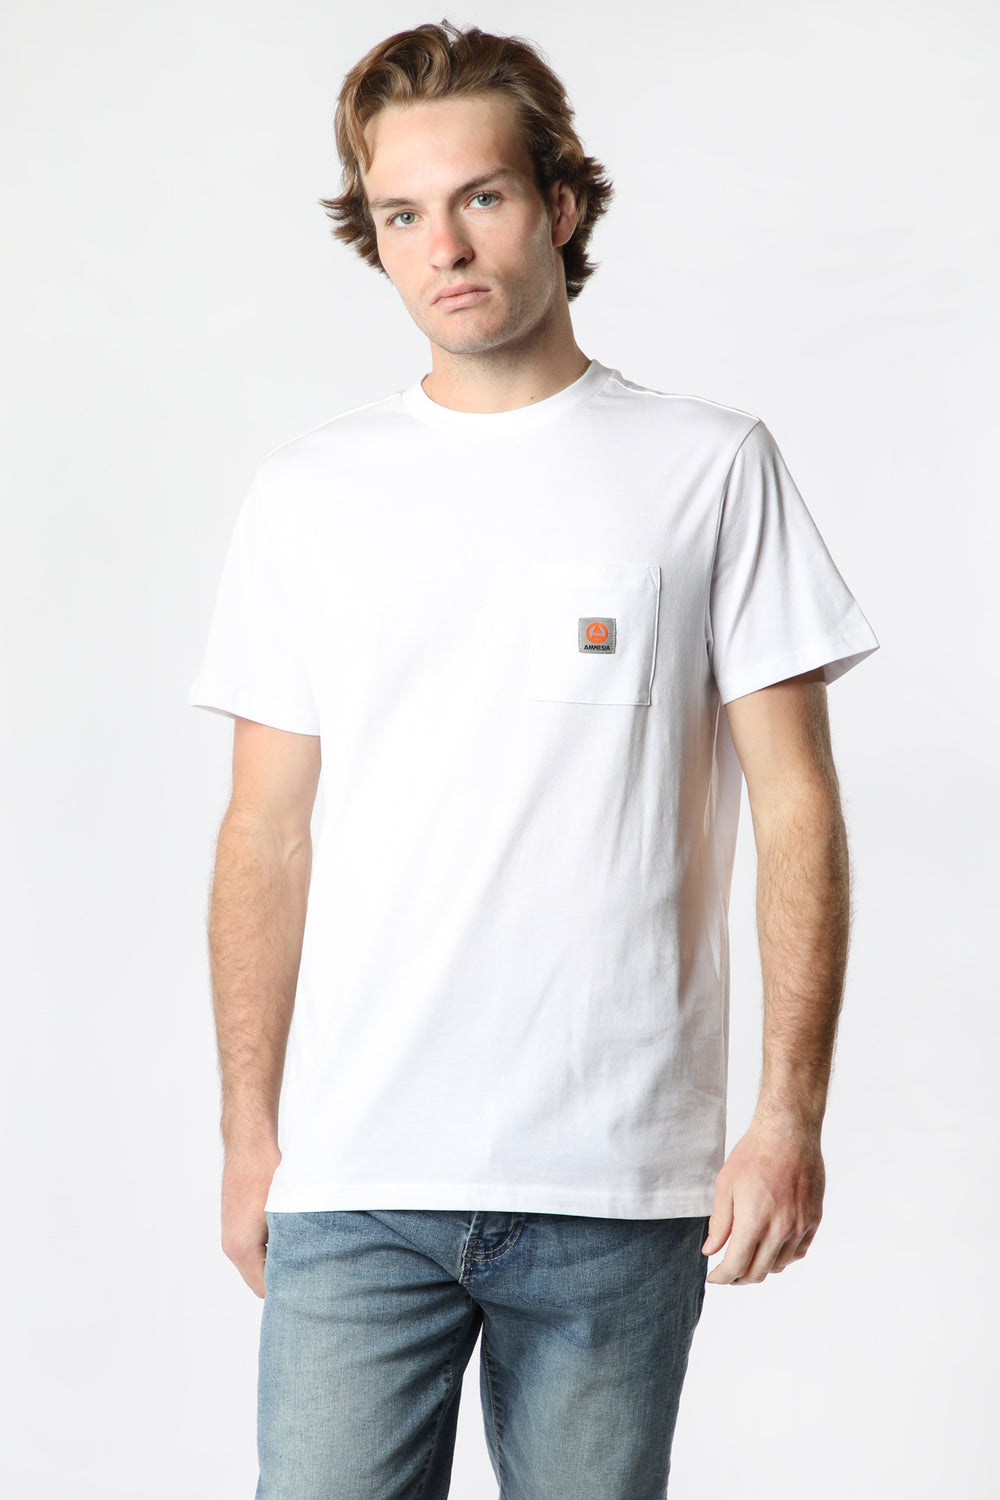 Amnesia Mens Crewneck Pocket T-Shirt White